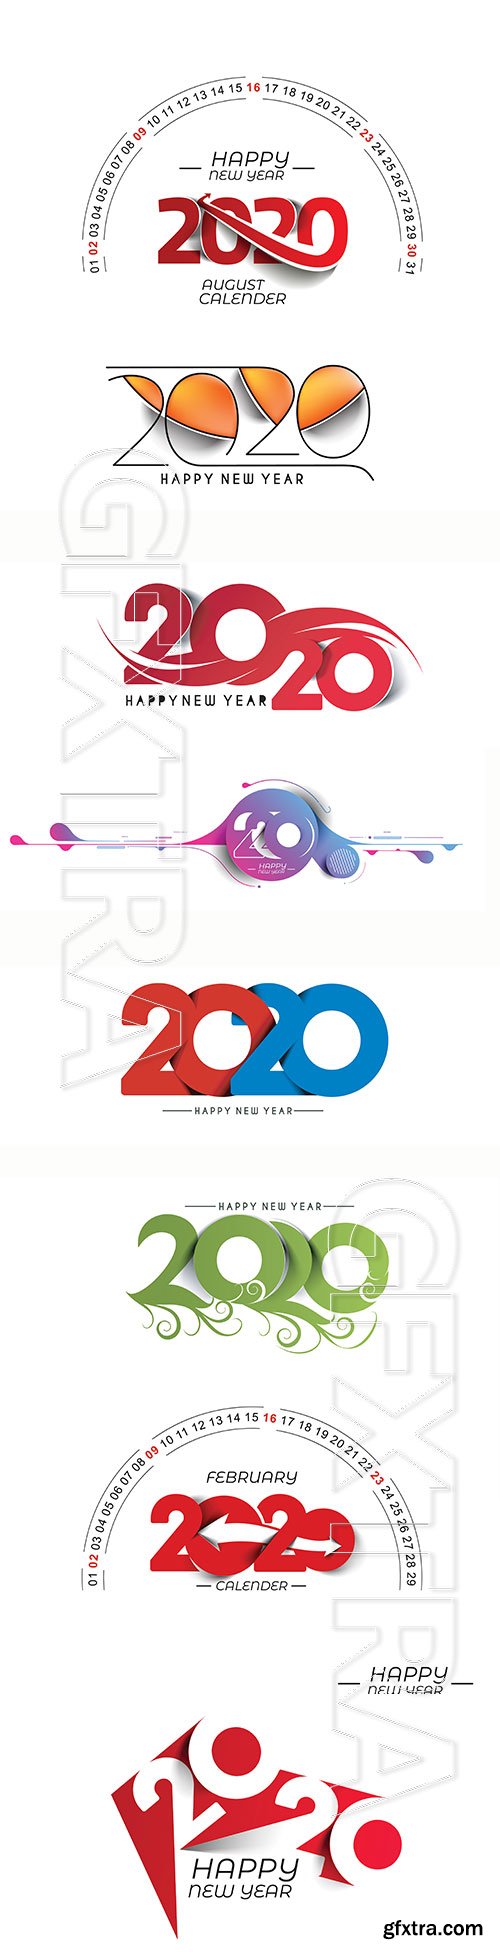 Happy New Year 2020 text design vector illustration